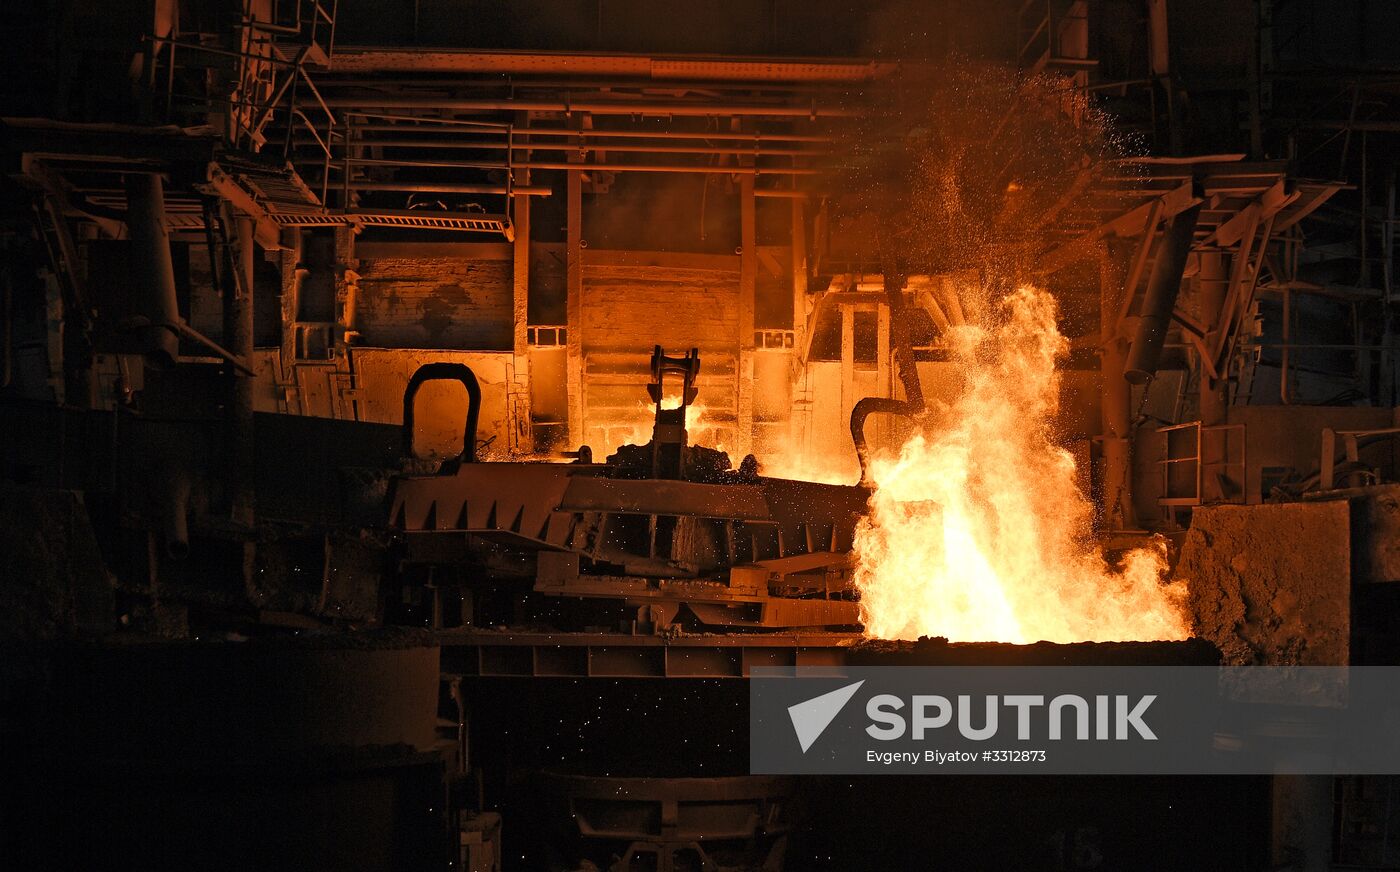 Vyksa Steel Works